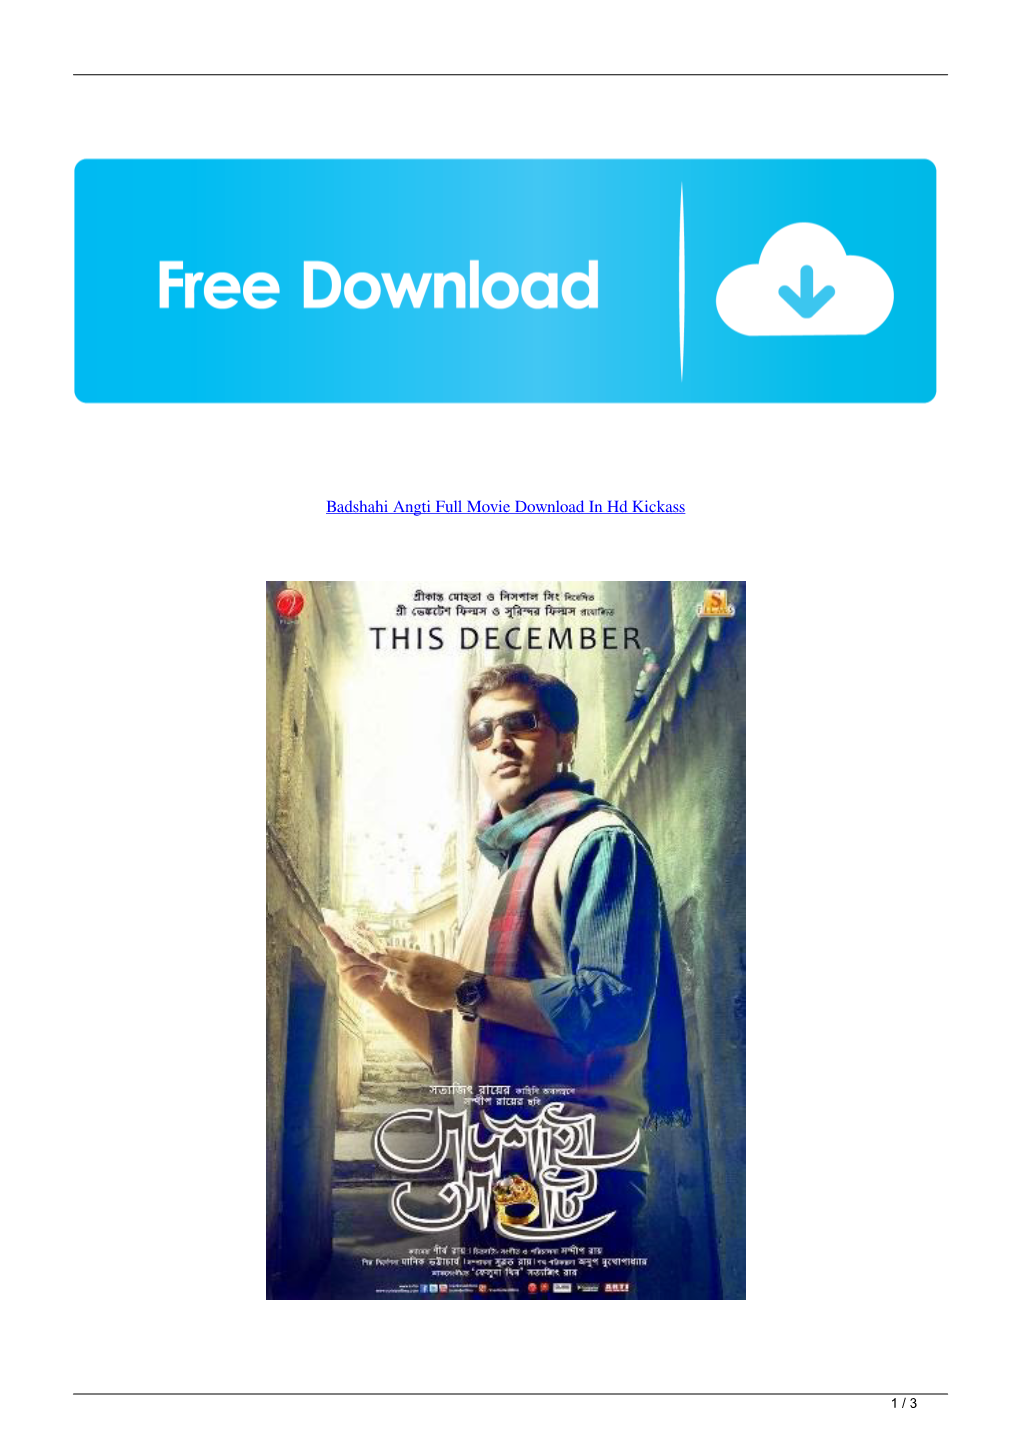 Badshahi Angti Full Movie Download in Hd Kickass